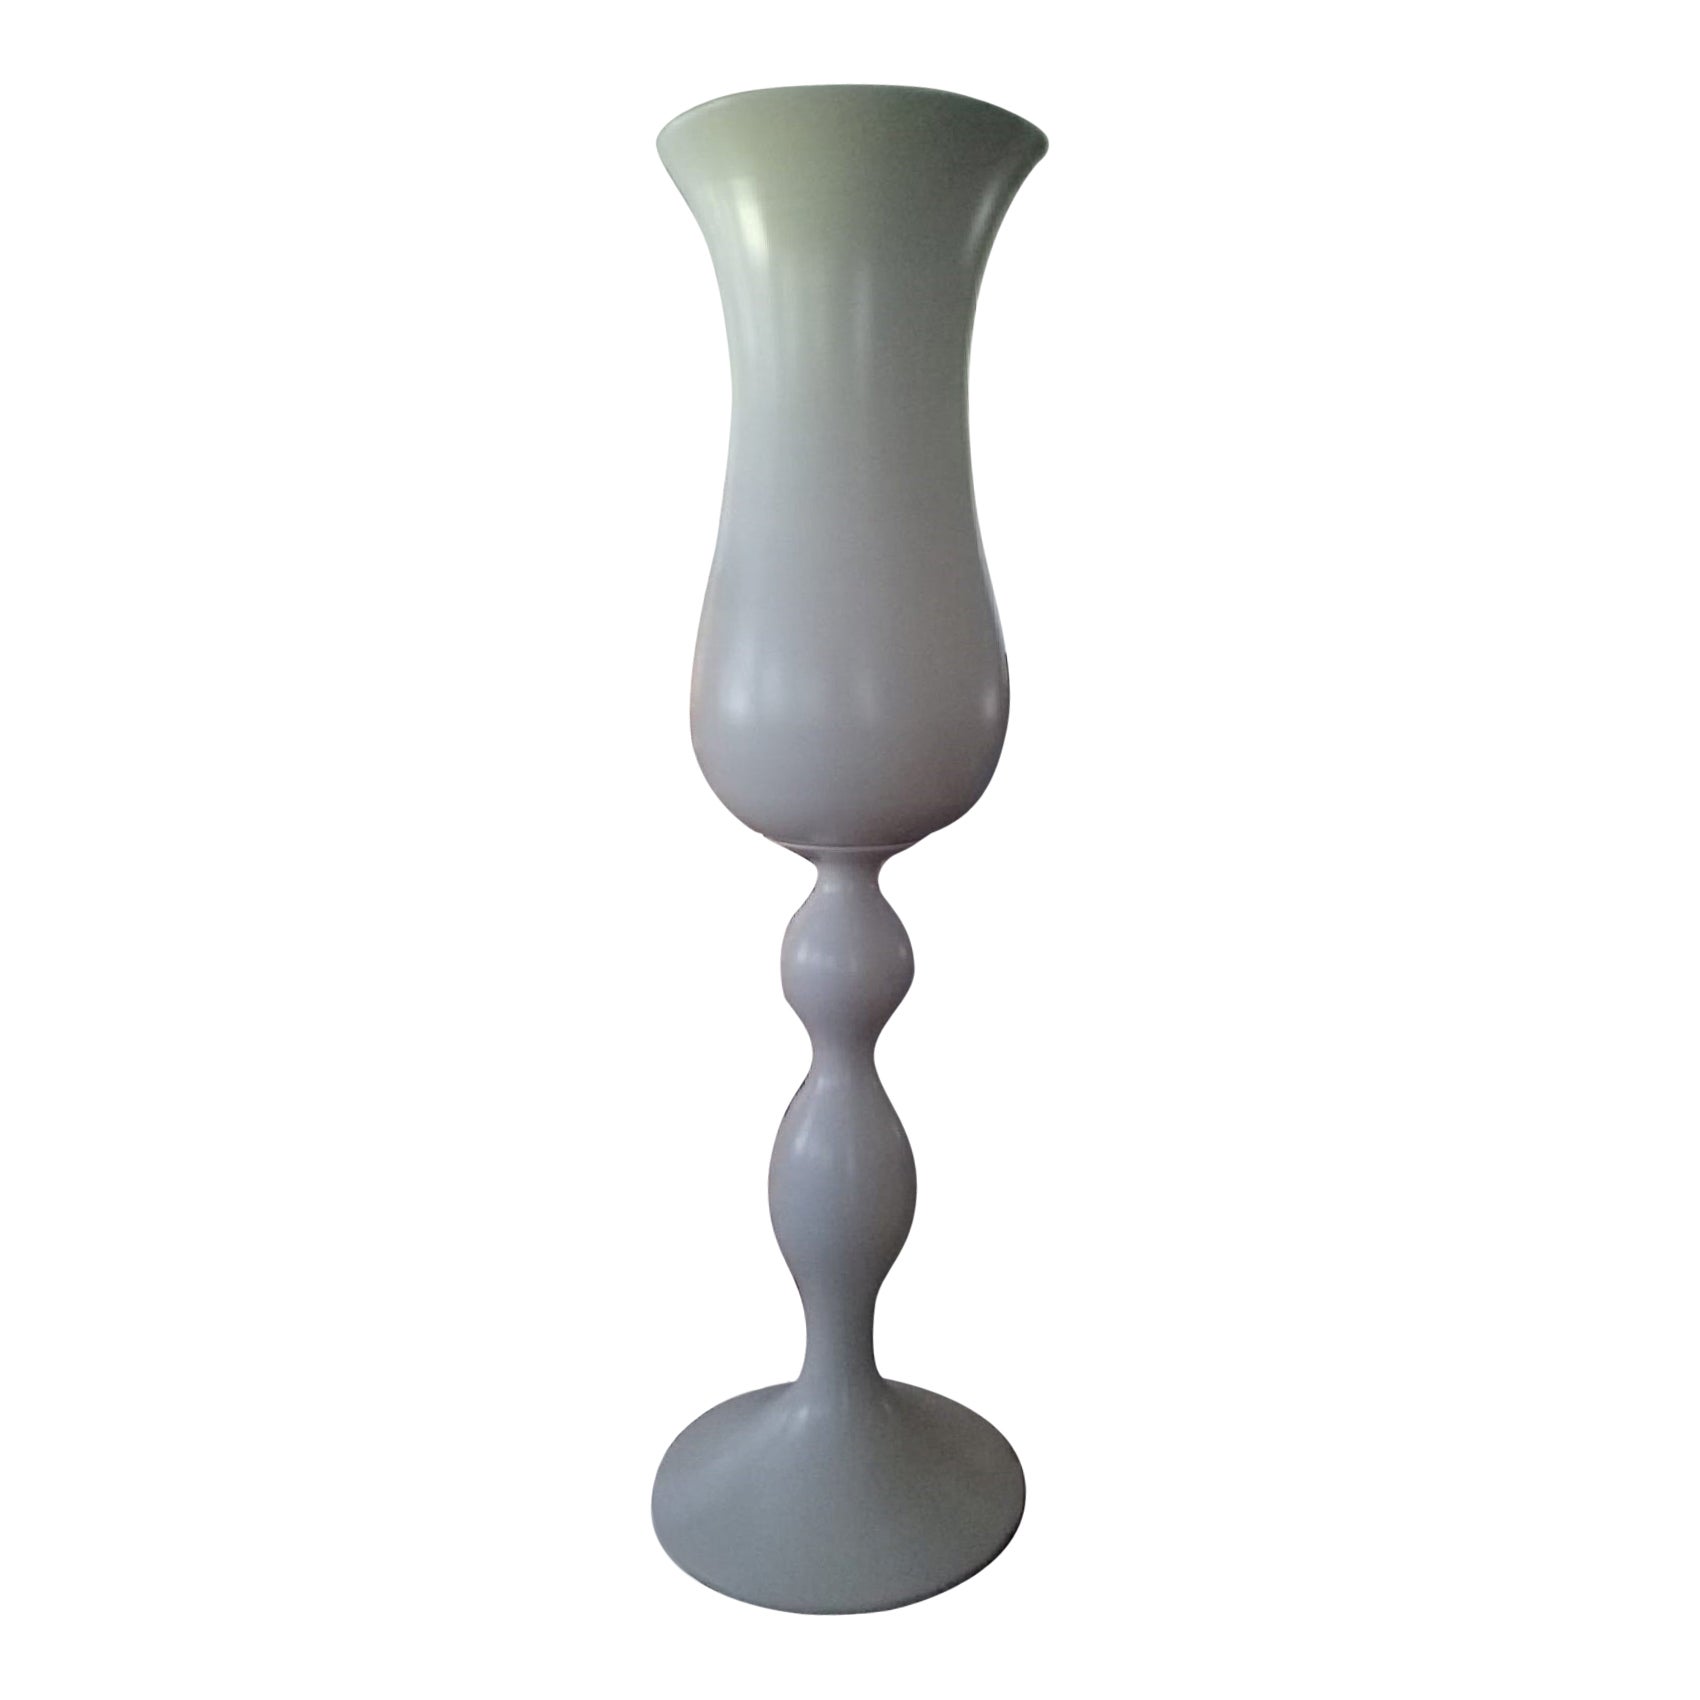 Ceramic Vase "Bob" White Matte Glazed by Gabriella B. Made in Italy